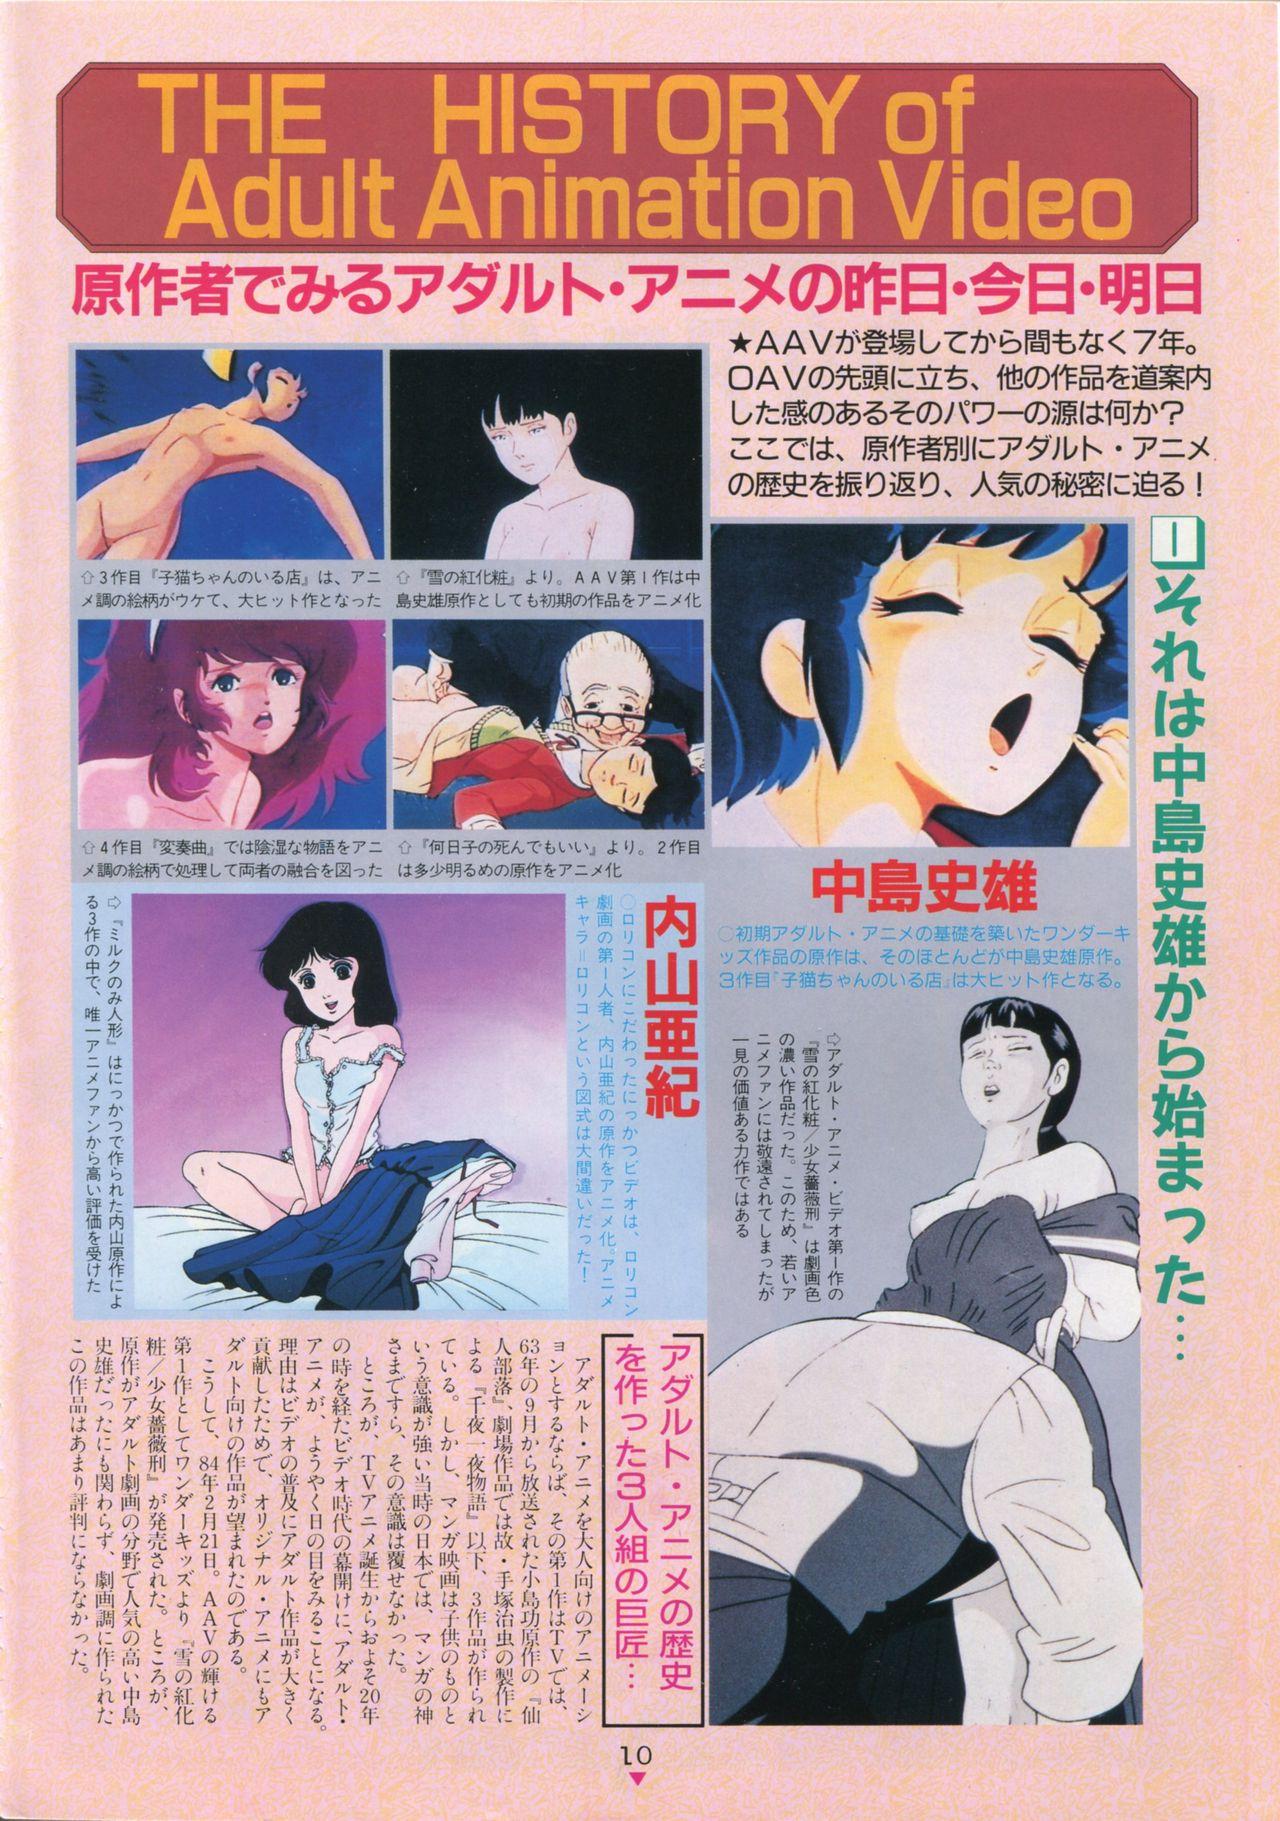 Bishoujo Anime Daizenshuu - Adult Animation Video Catalog 1991 5